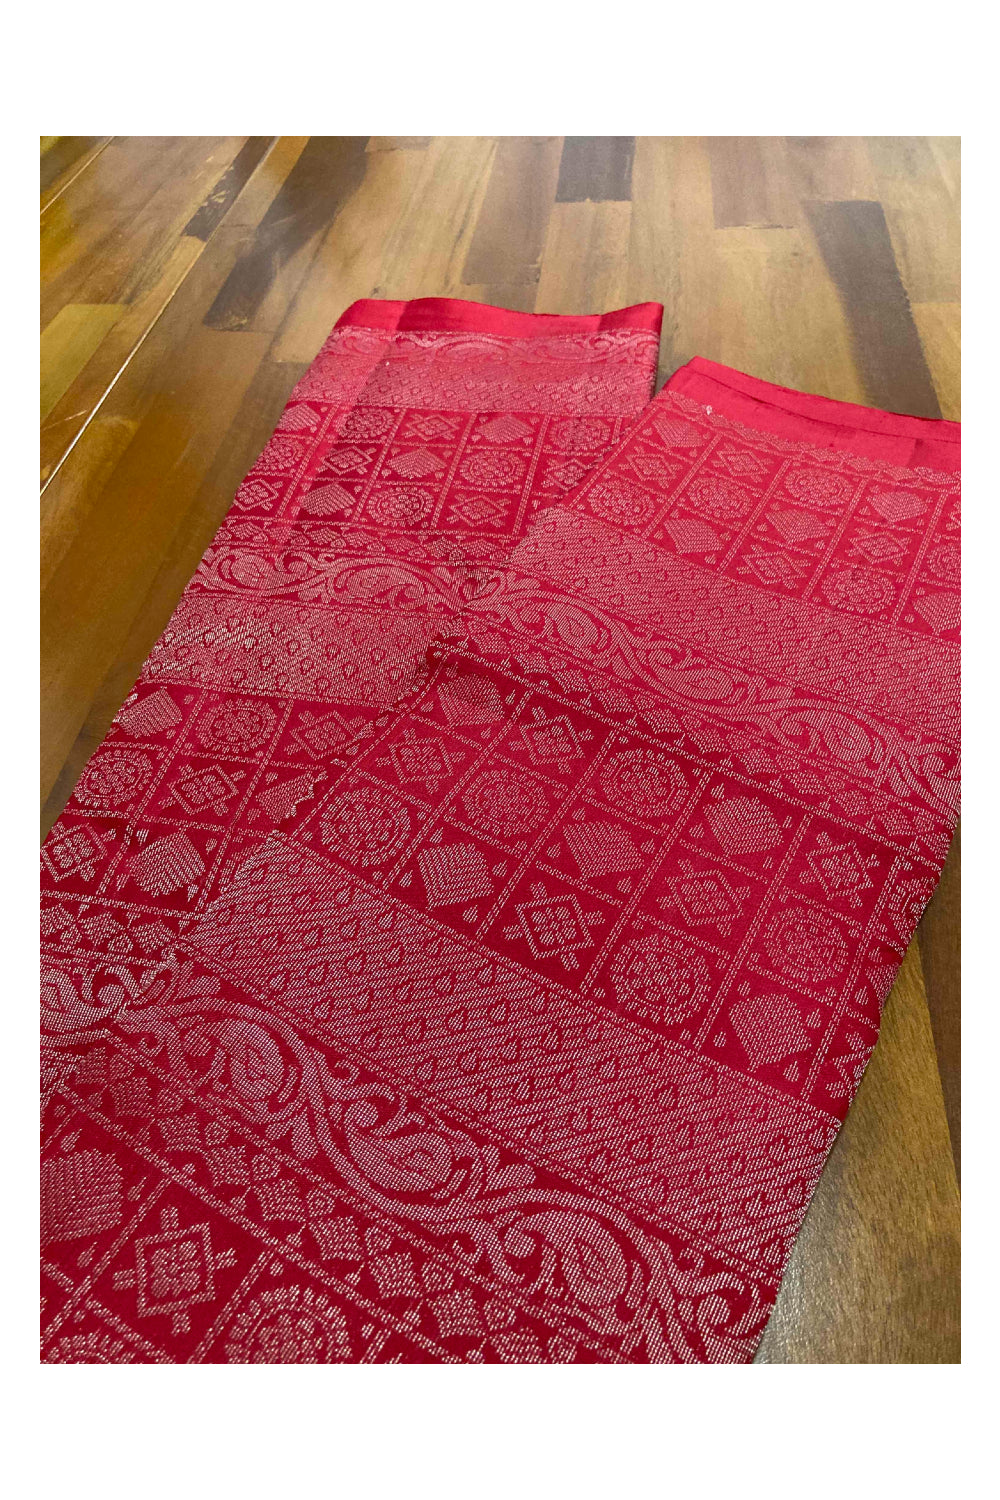 Southloom Handloom Pure Silk Manthrakodi Kanchipuram Saree in Single Red Colour and Silver Zari Motifs